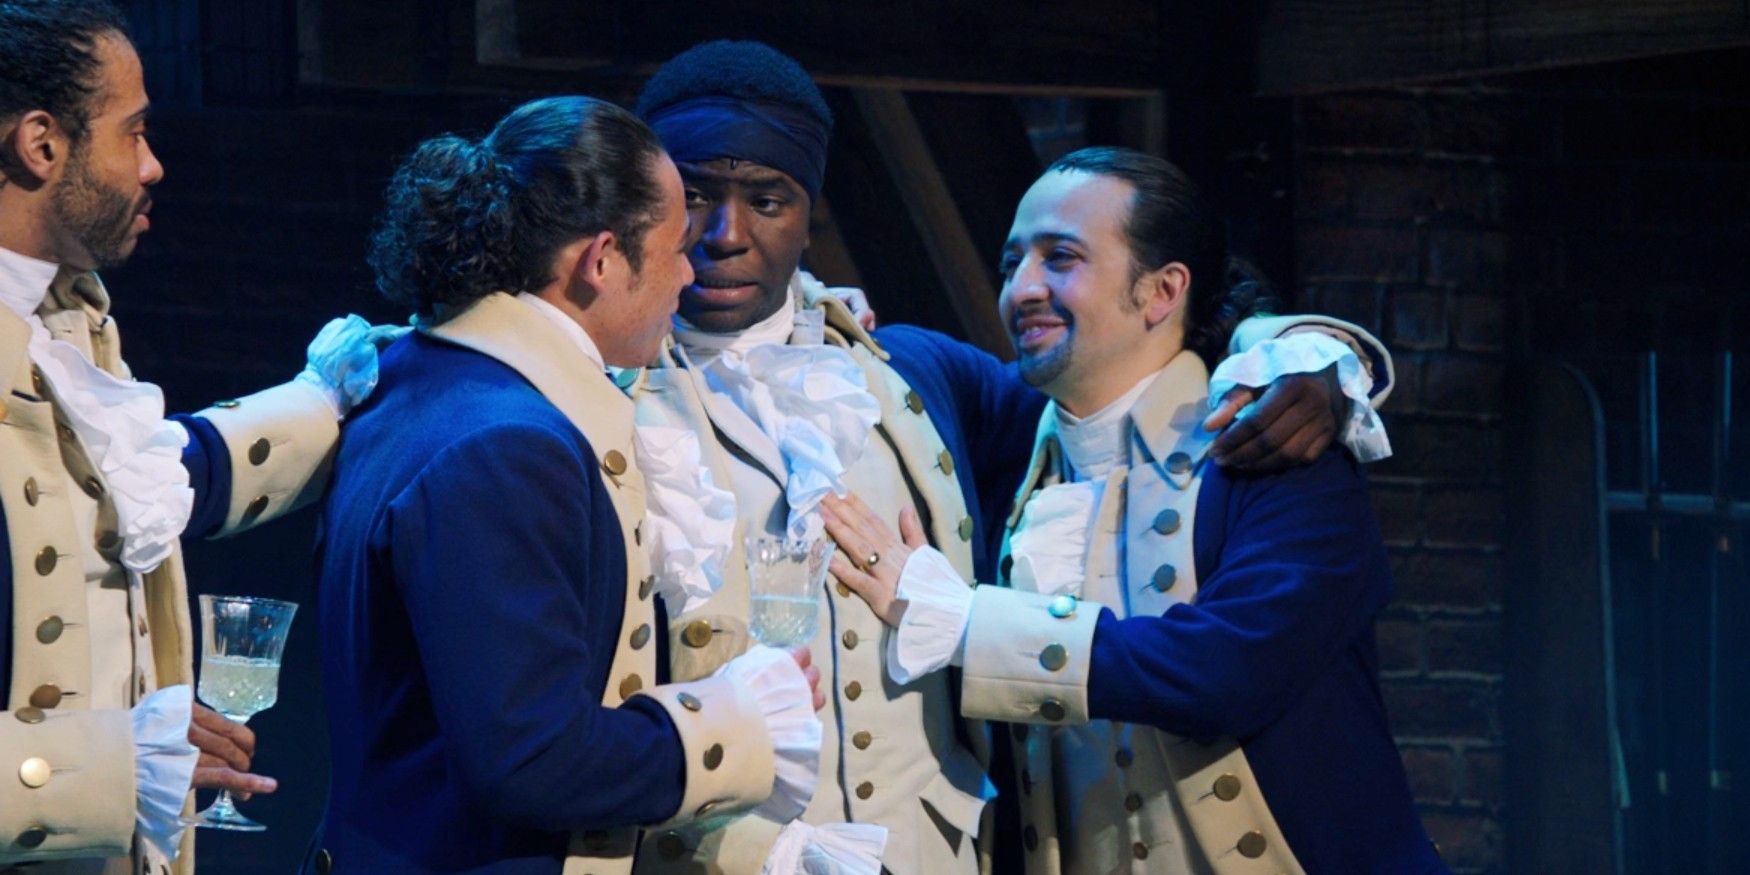 Hamilton embraces his friends in their blue coats in Hamilton